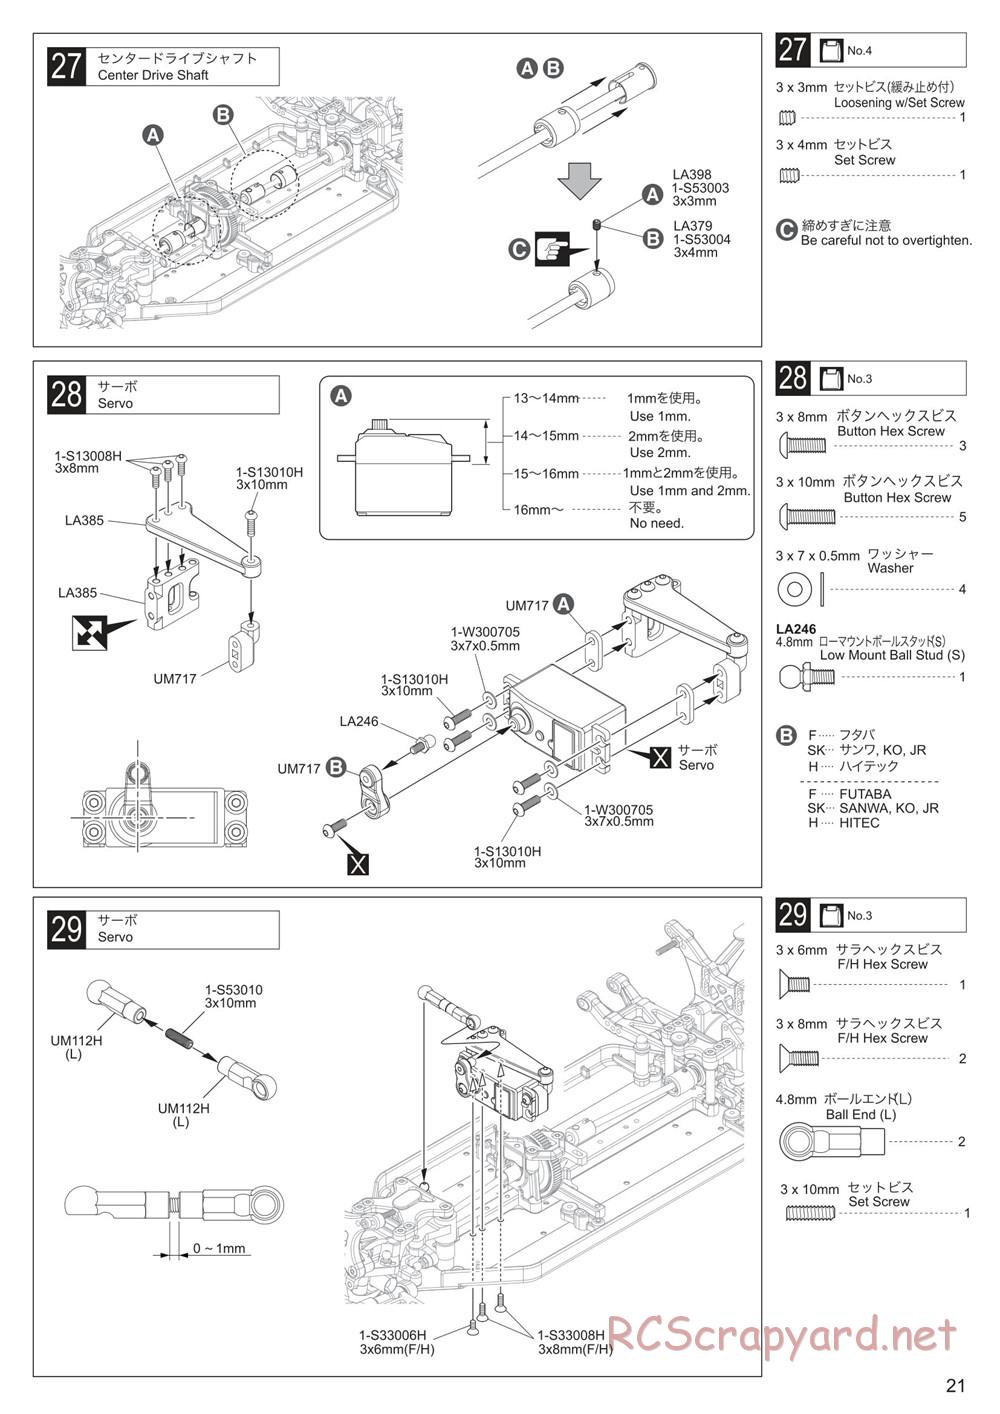 Kyosho - Lazer ZX7 - Manual - Page 21